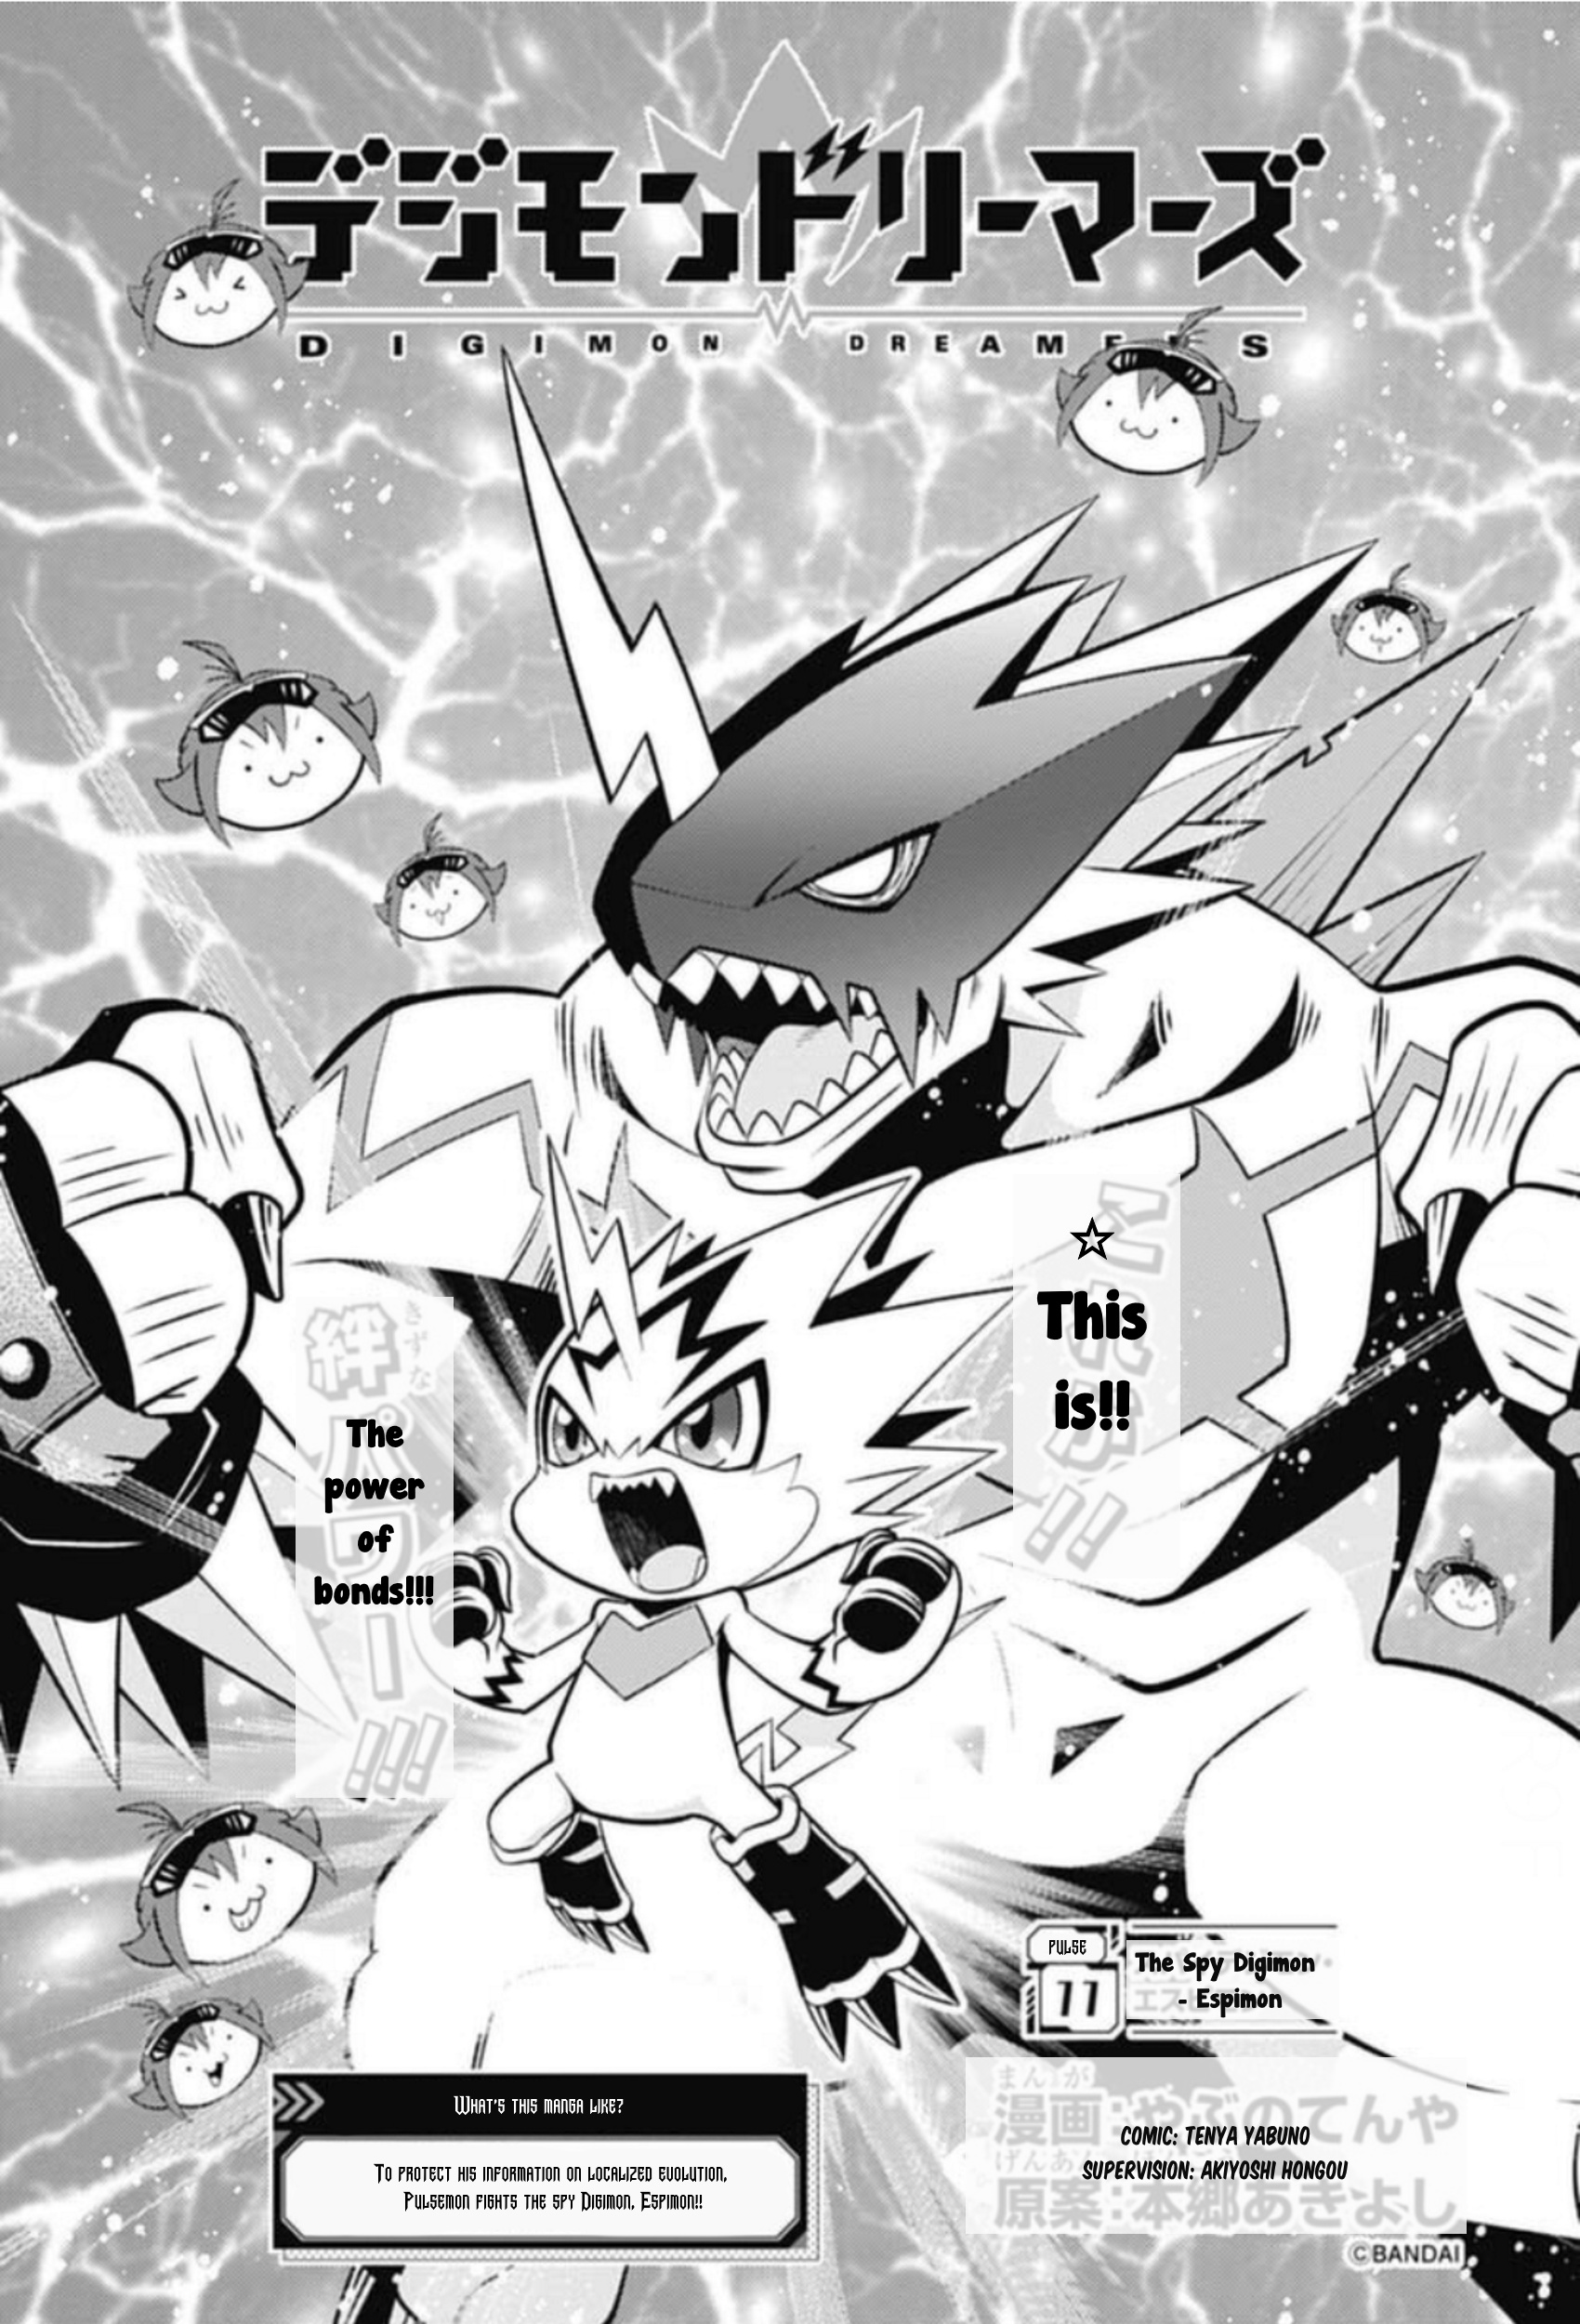 Digimon Dreamers Vol.1 Chapter 11: The Spy Digimon - Espimon - Picture 2